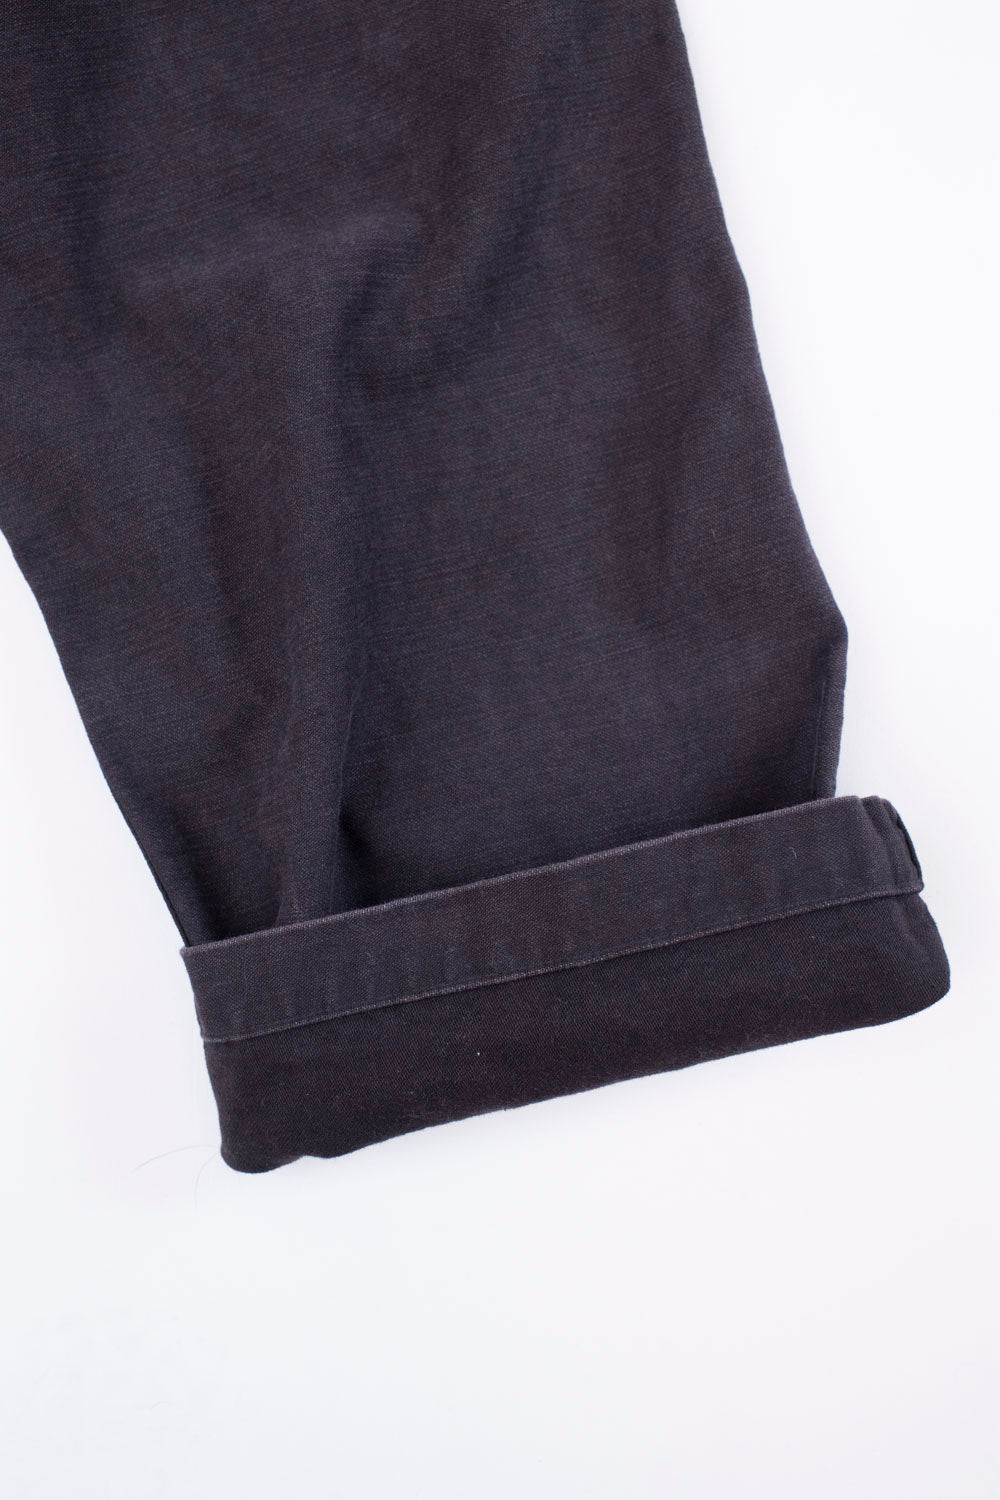 01-5002-61S - Fatigue Pants Reverse Sateen - Standard Fit - Black Stone